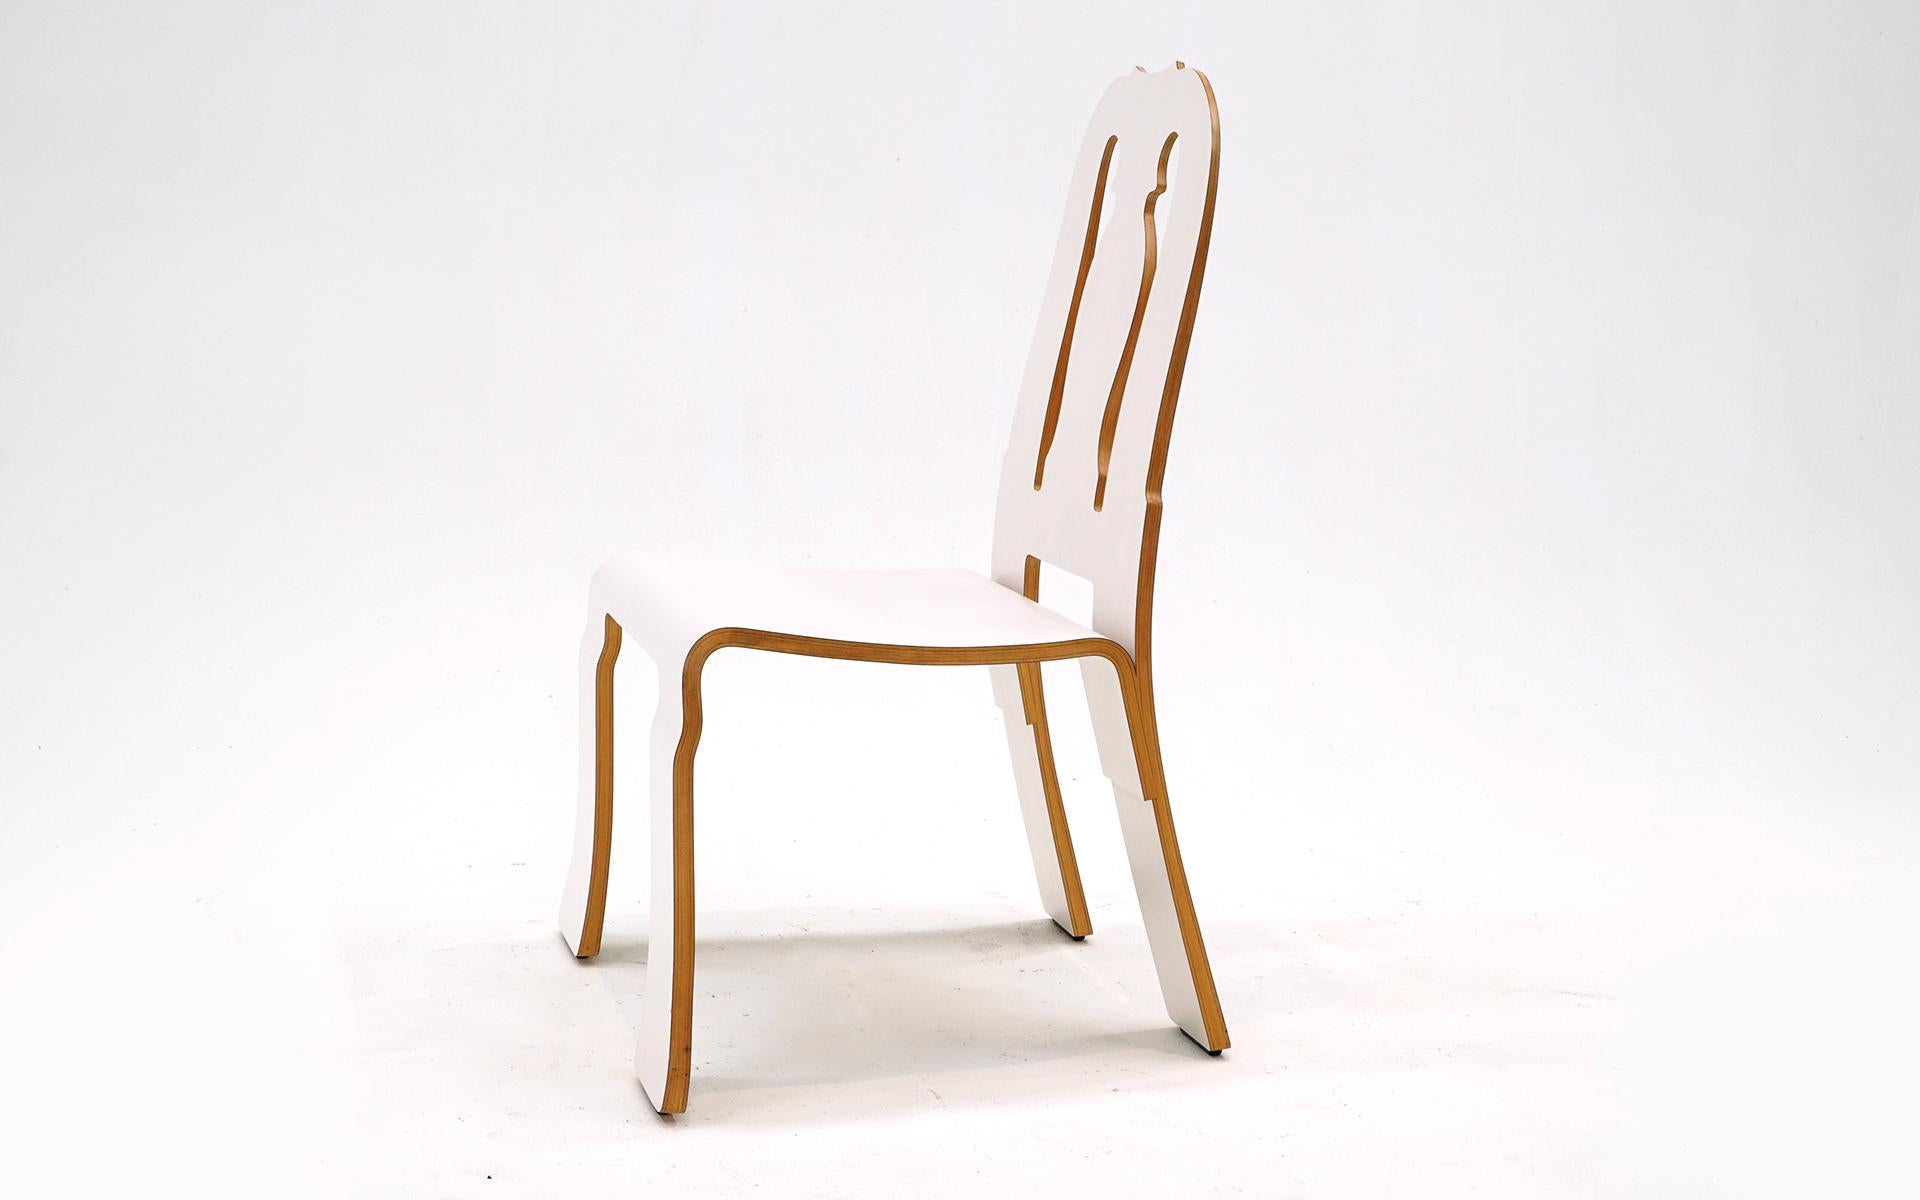 Post-Modern Robert Venturi Queen Anne Chair in Rare White Finish, Amazing Condition, Signed